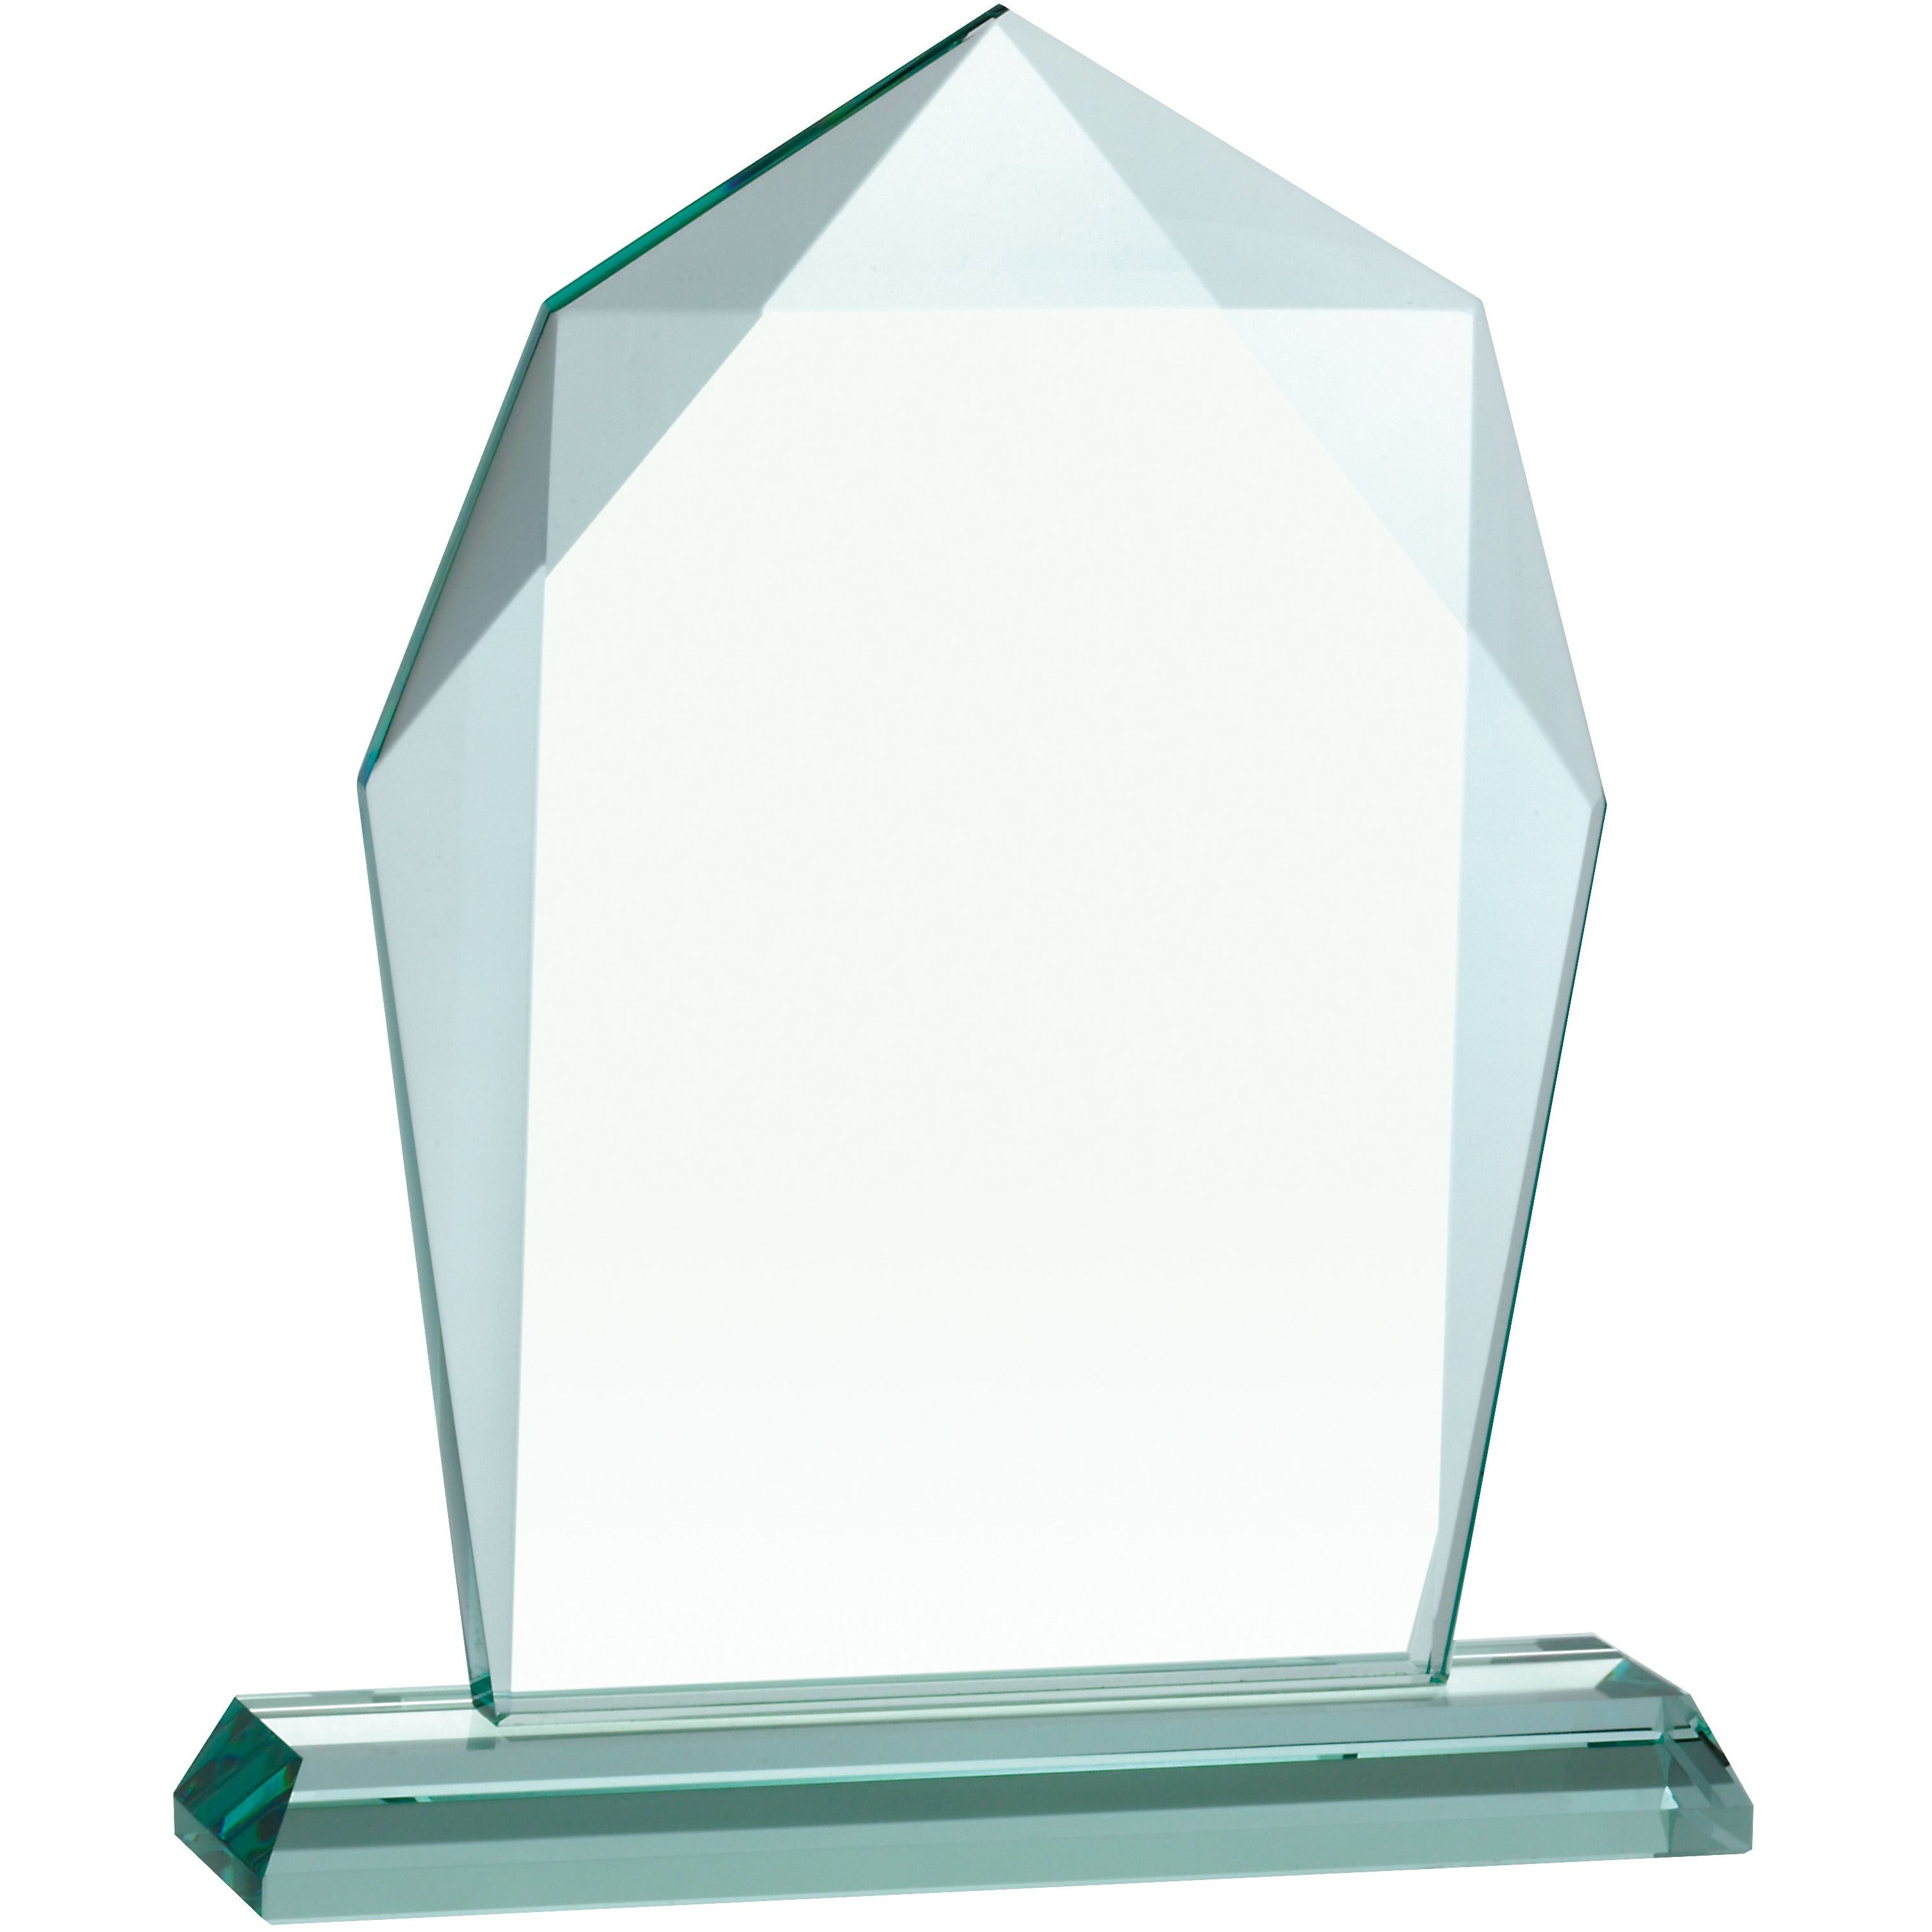 Jade Glass Peak Award (CLEARANCE)